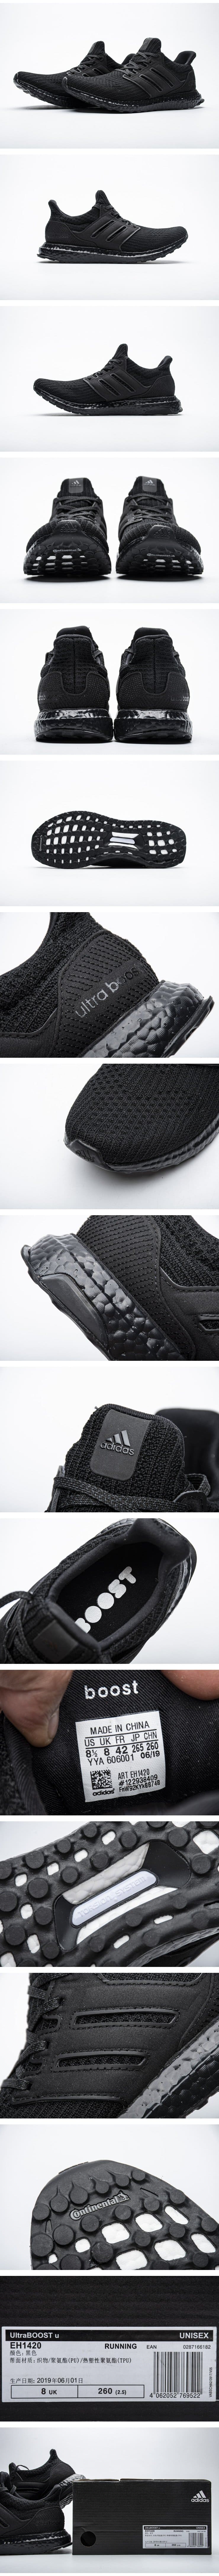 Adidas Ultra Boost 4.0 Black EH1420 アディダス ウルトラブースト 4.0 ブラック